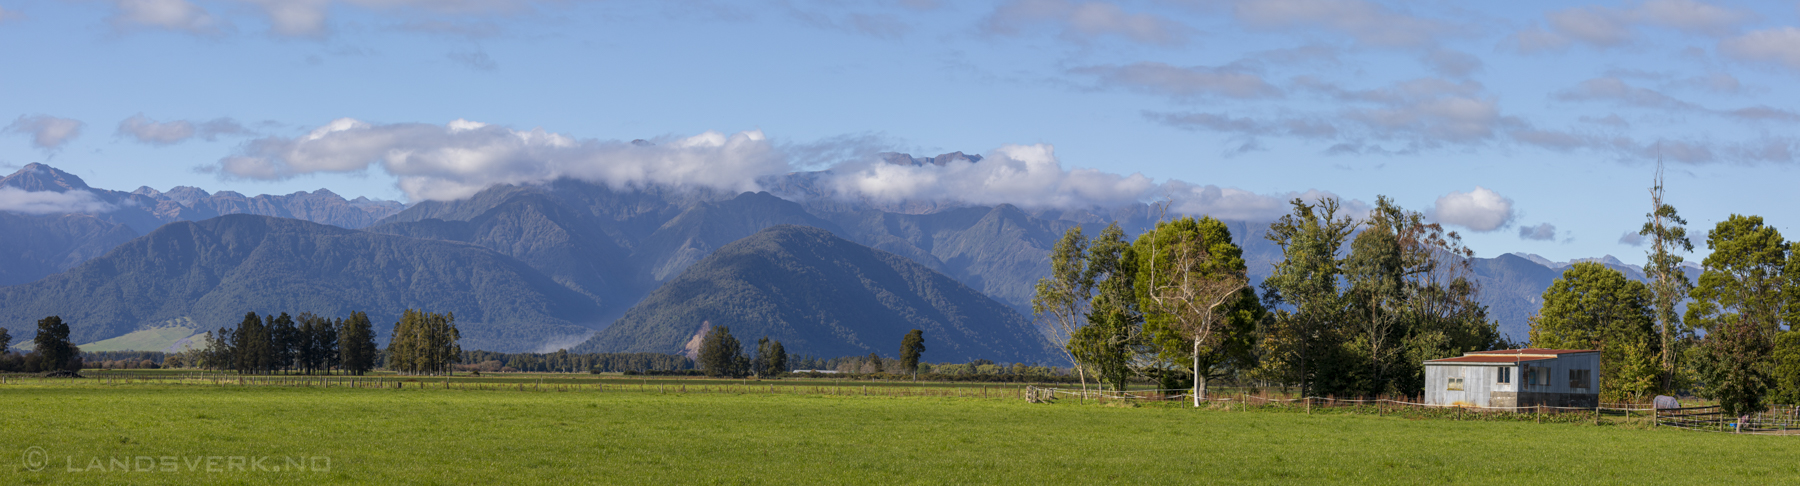 Hokitika Gorge, New Zealand. 

(Canon EOS 5D Mark IV / Canon EF 100-400mm f/4.5-5.6 L IS II USM)